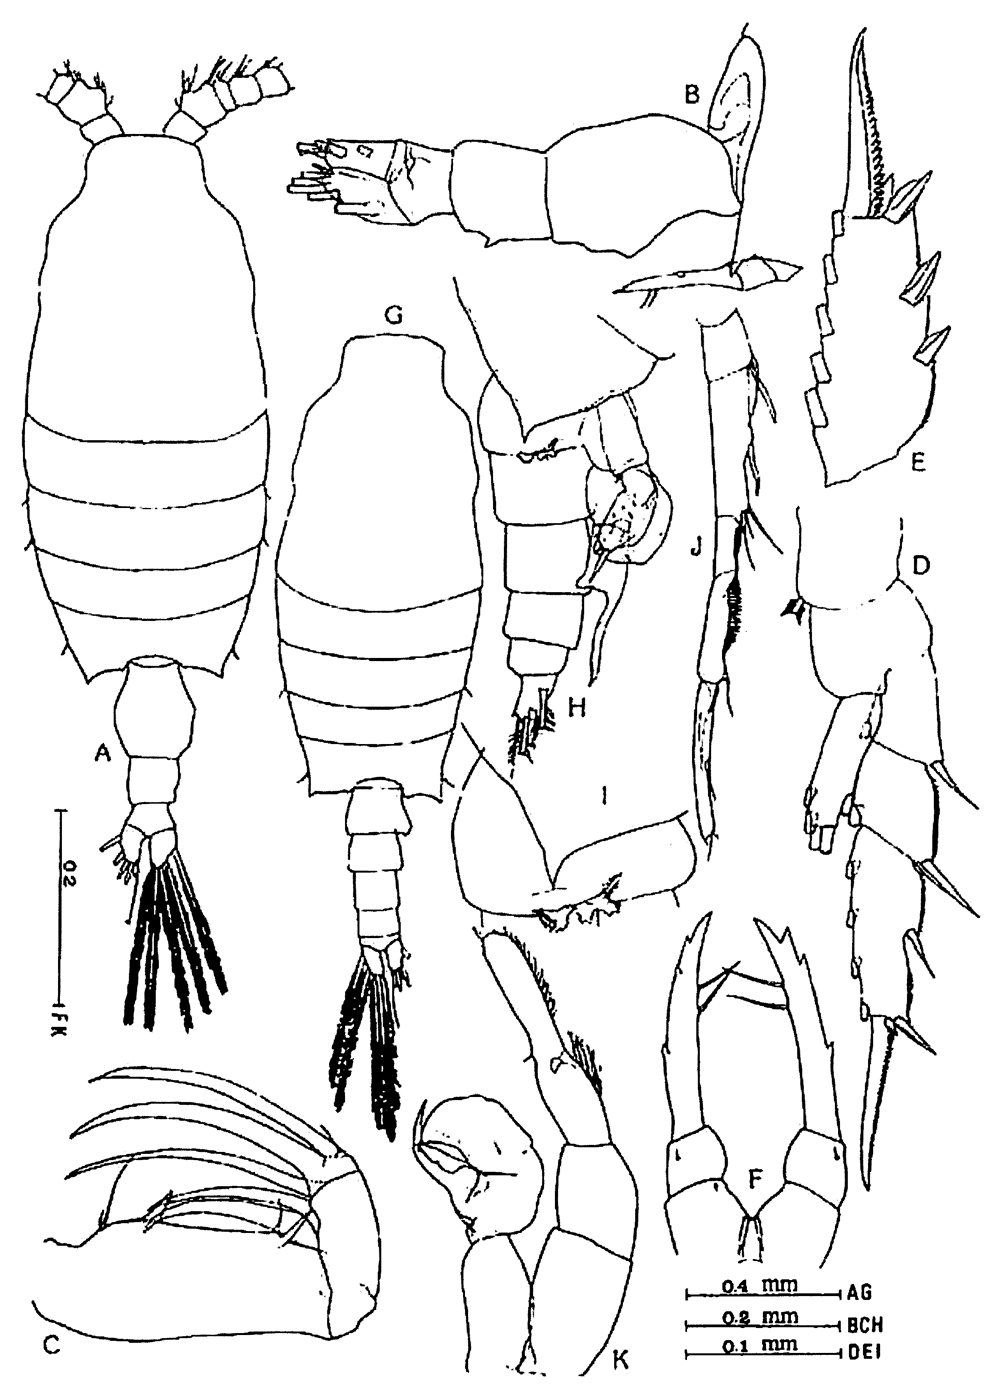 Species Candacia bradyi - Plate 7 of morphological figures